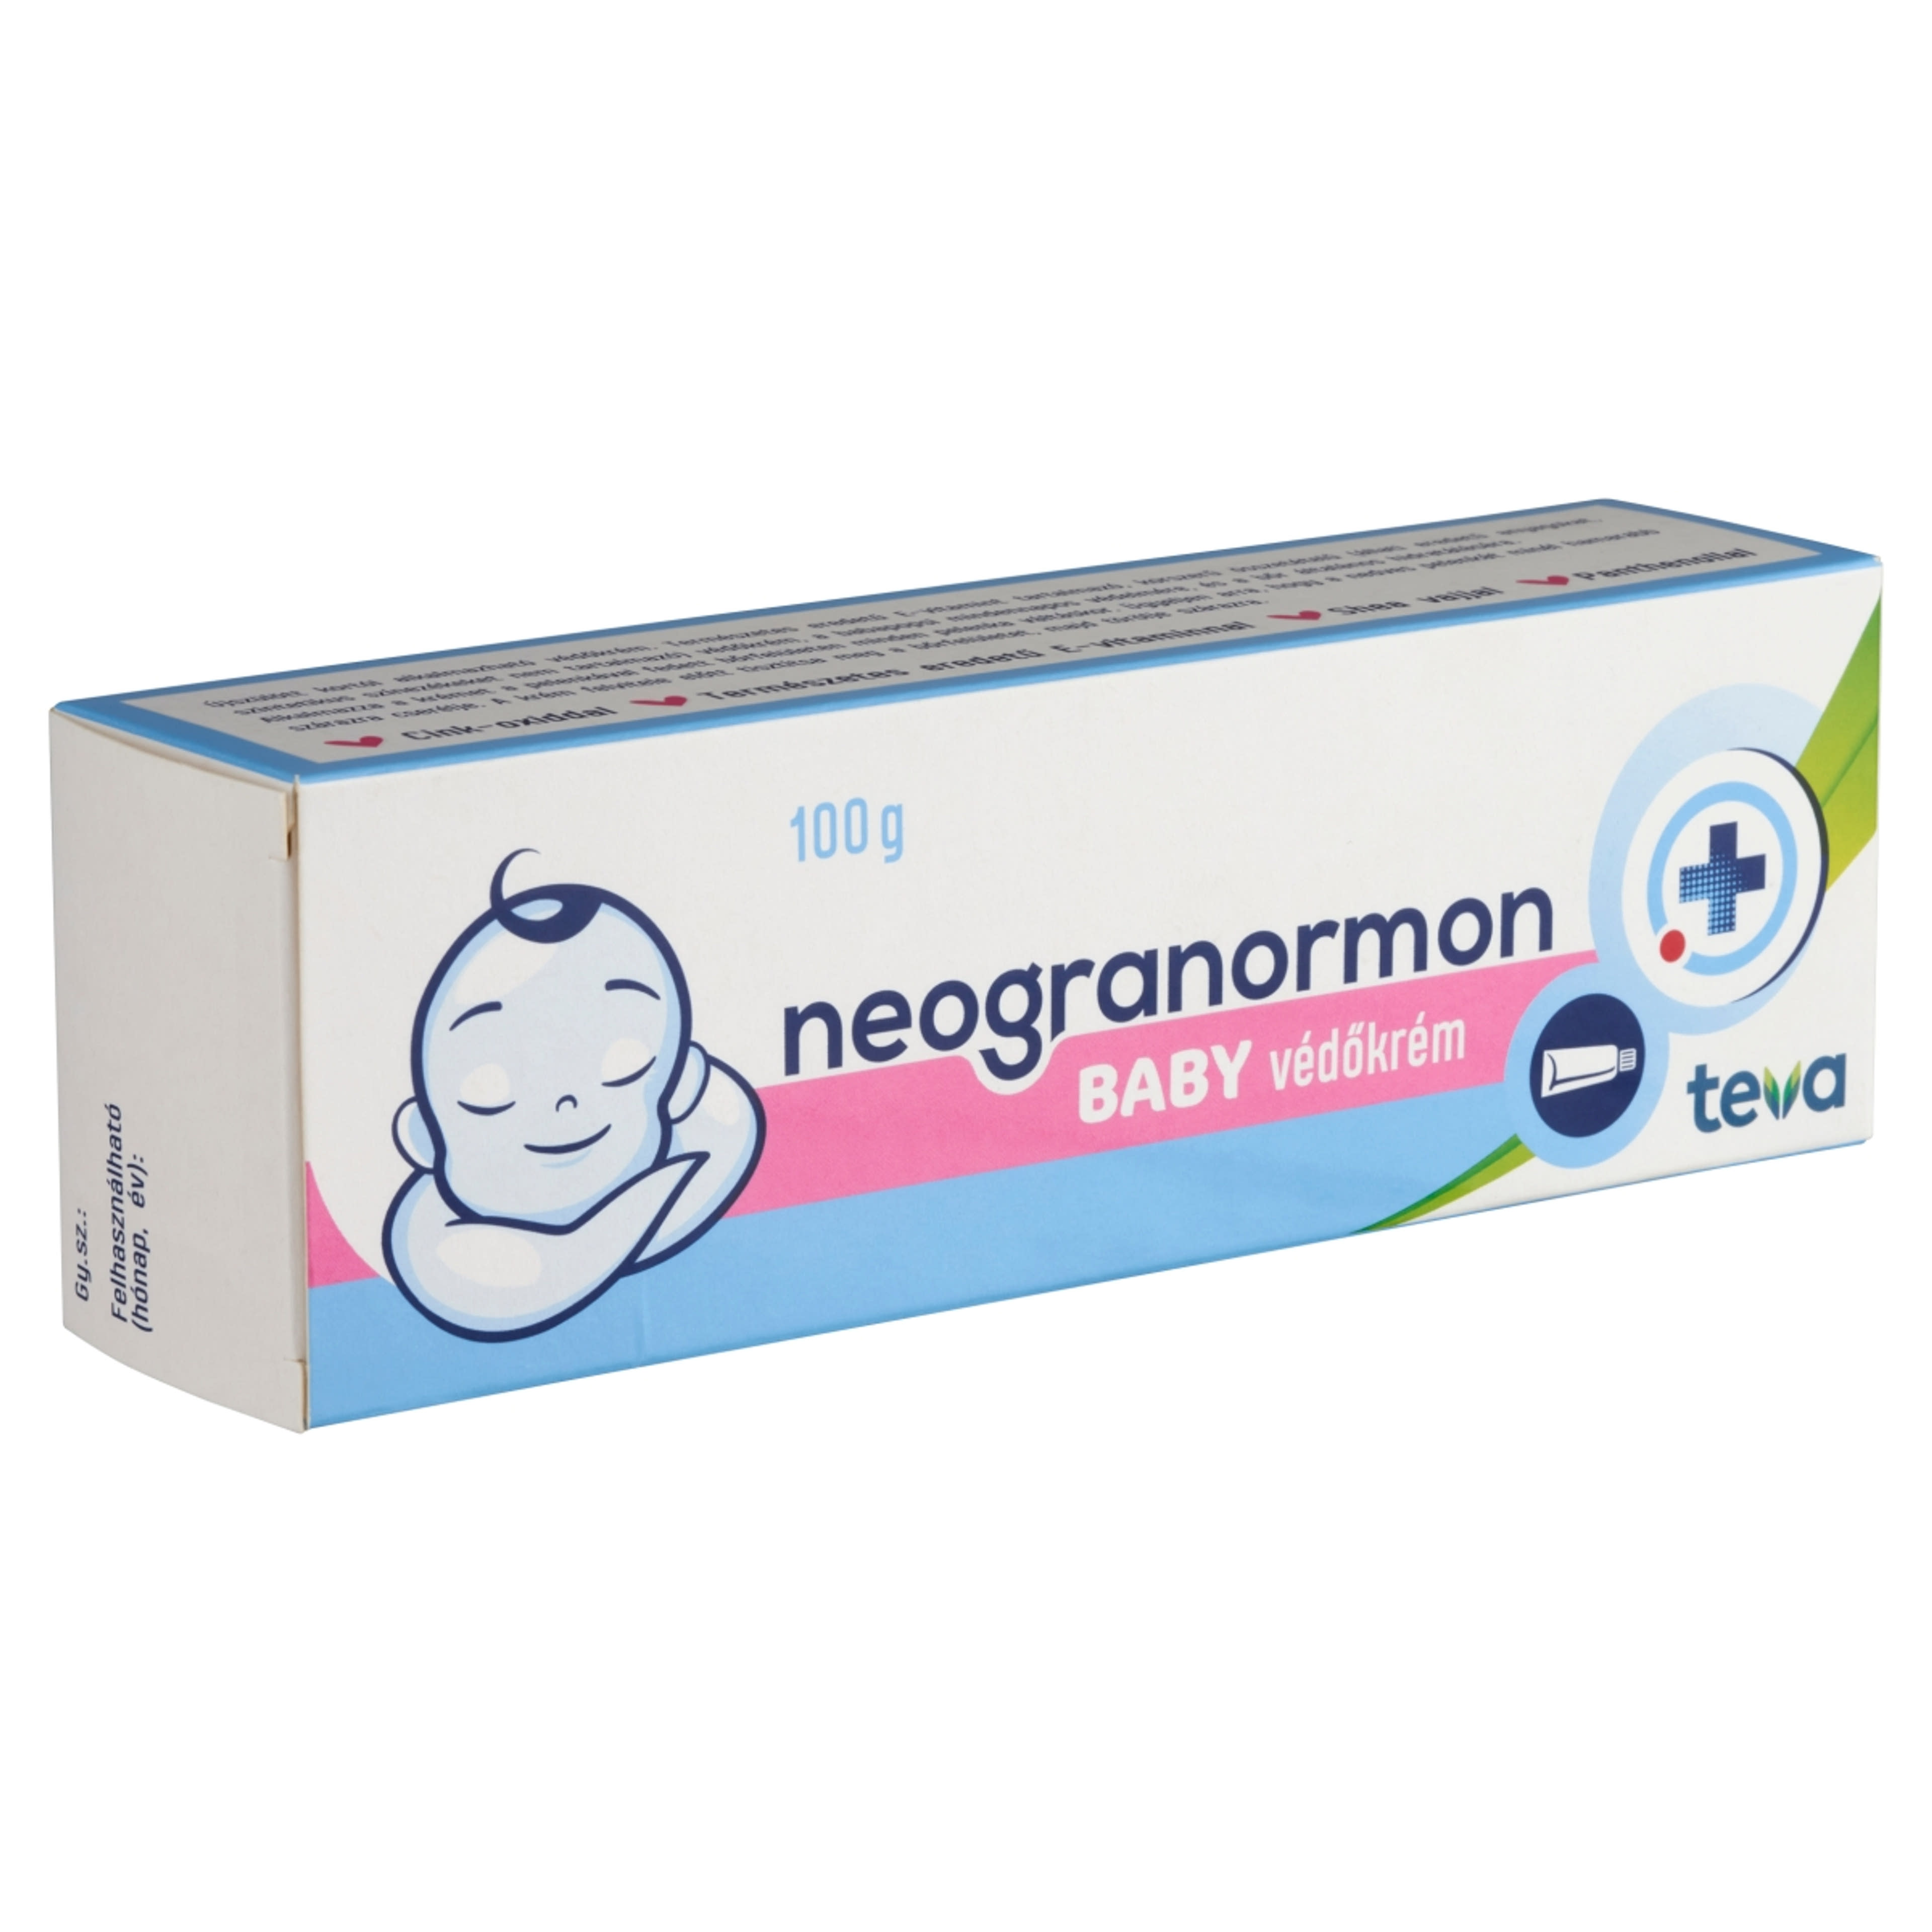 Neogranormon Baby védőkrém - 100 g-2